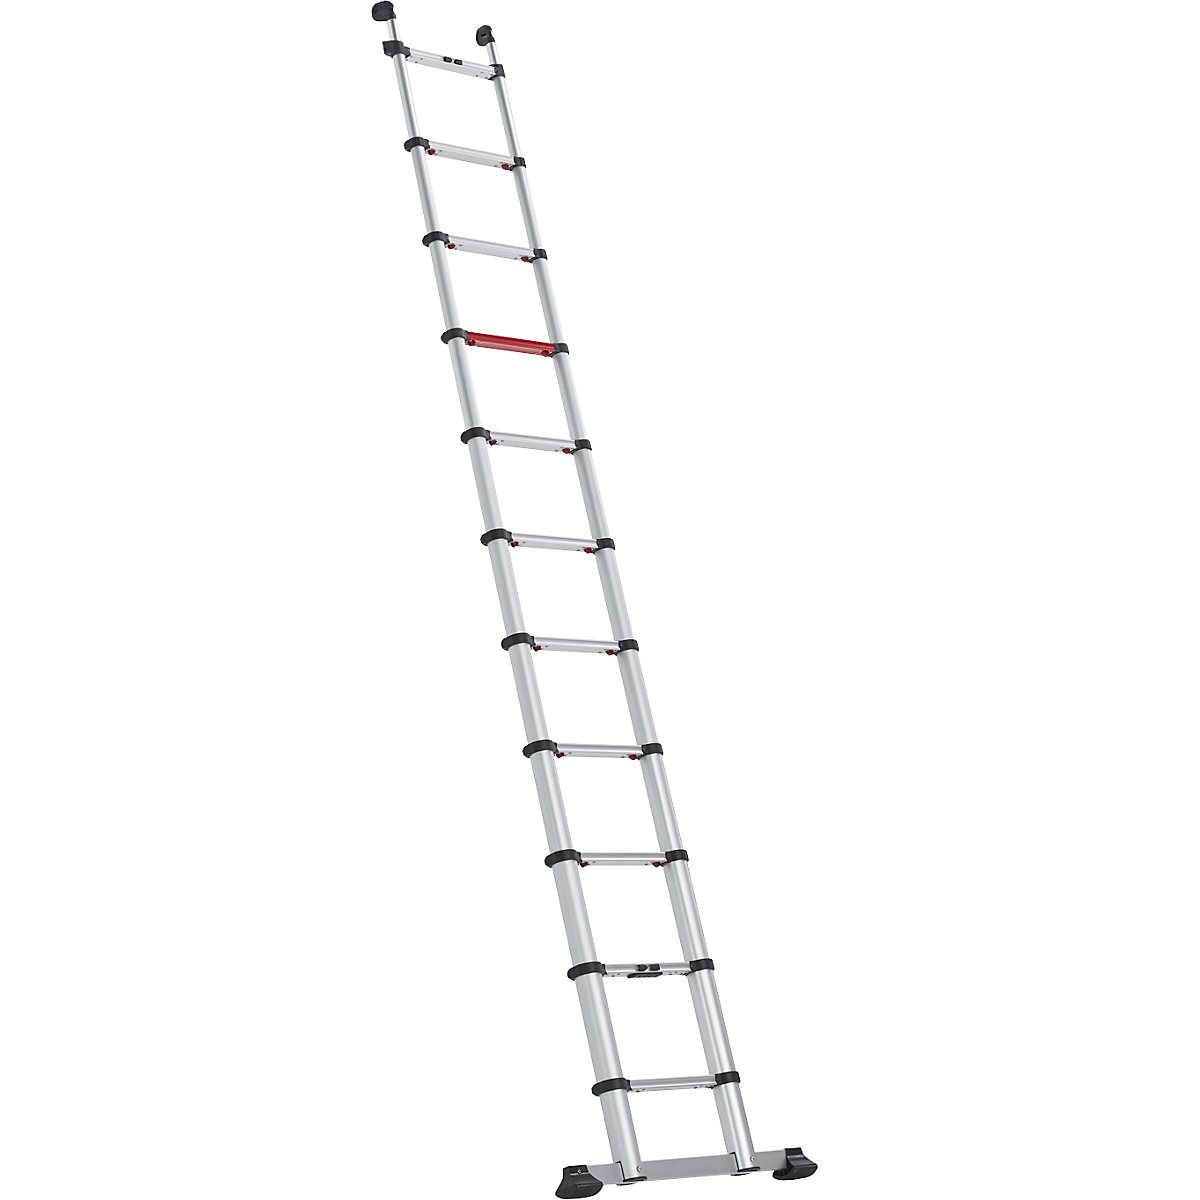 Telescopic lean-to ladder – Altrex